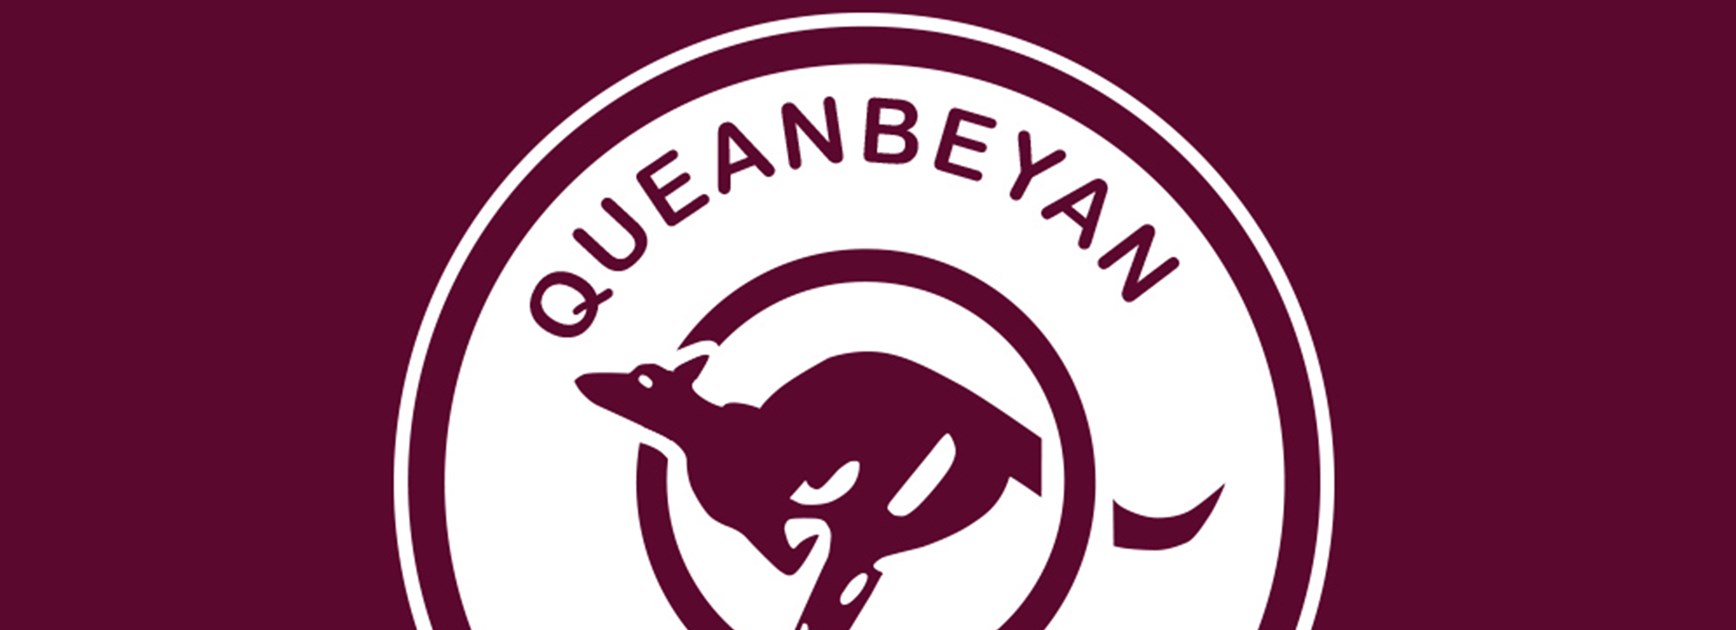 Players wanted for 2022 season: Queanbeyan Kangaroos